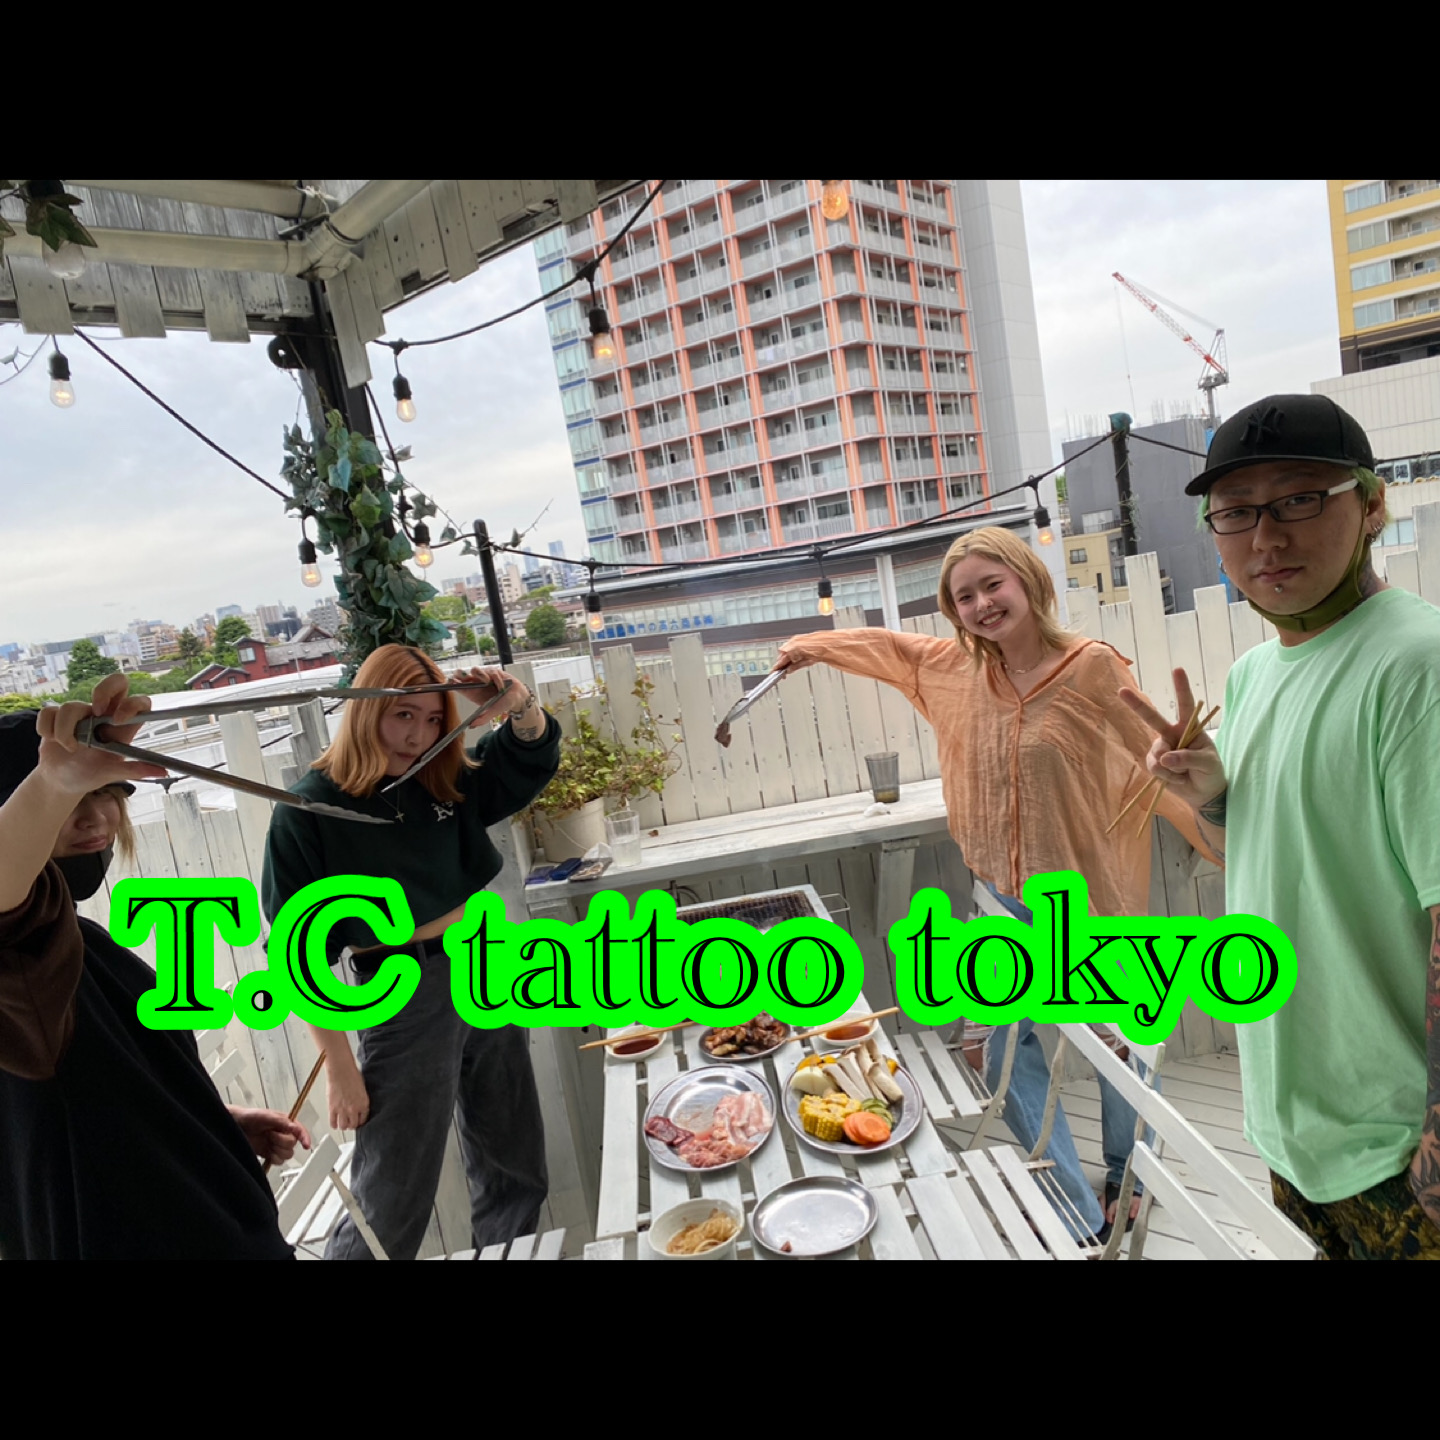 T.C tattoo tokyo 大集合